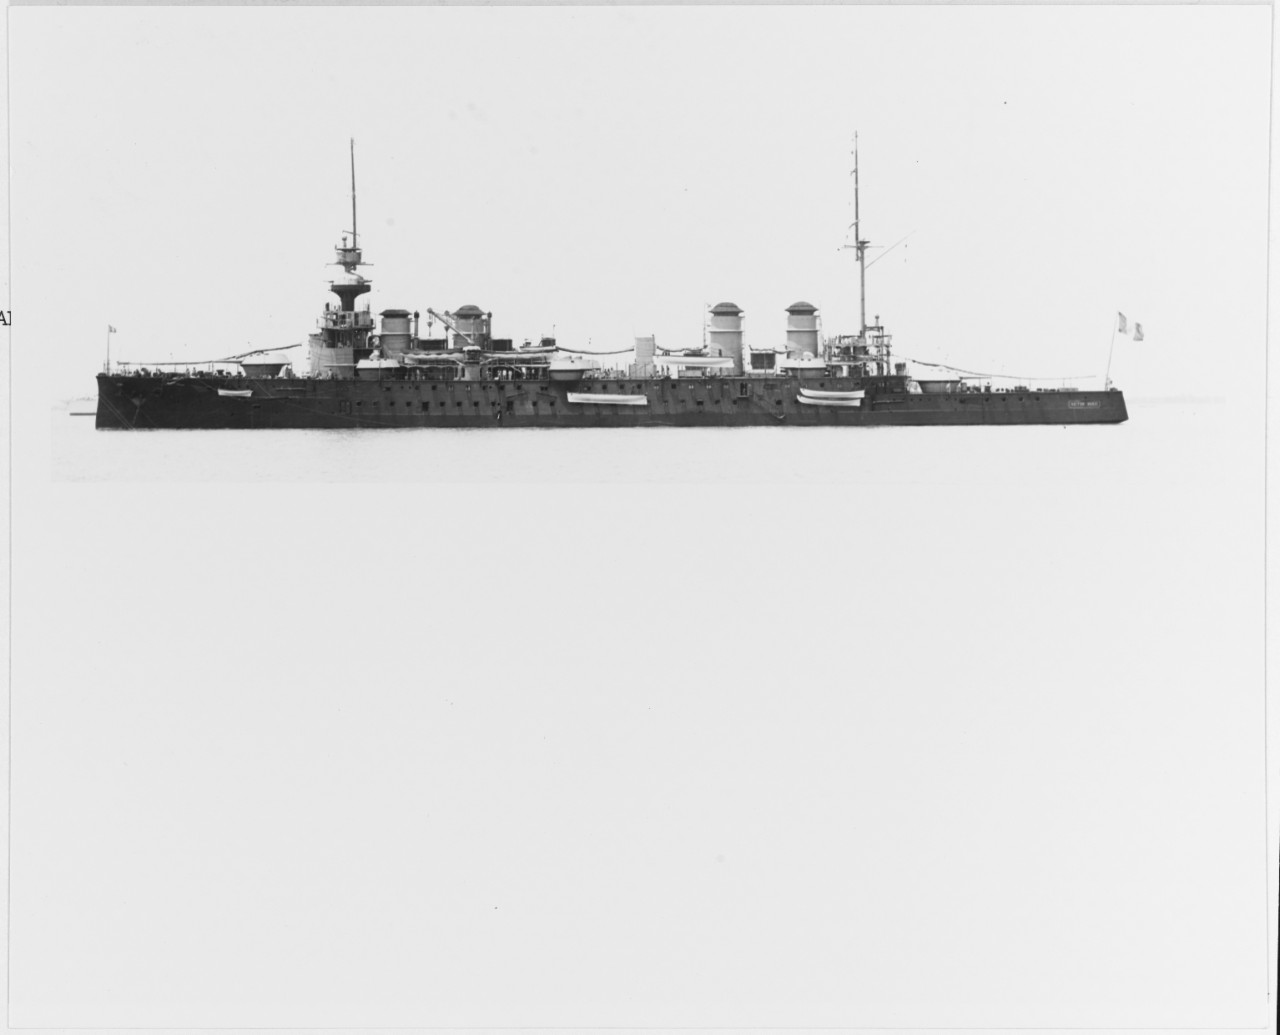 VICTOR HUGO (French armored cruiser, 1904)